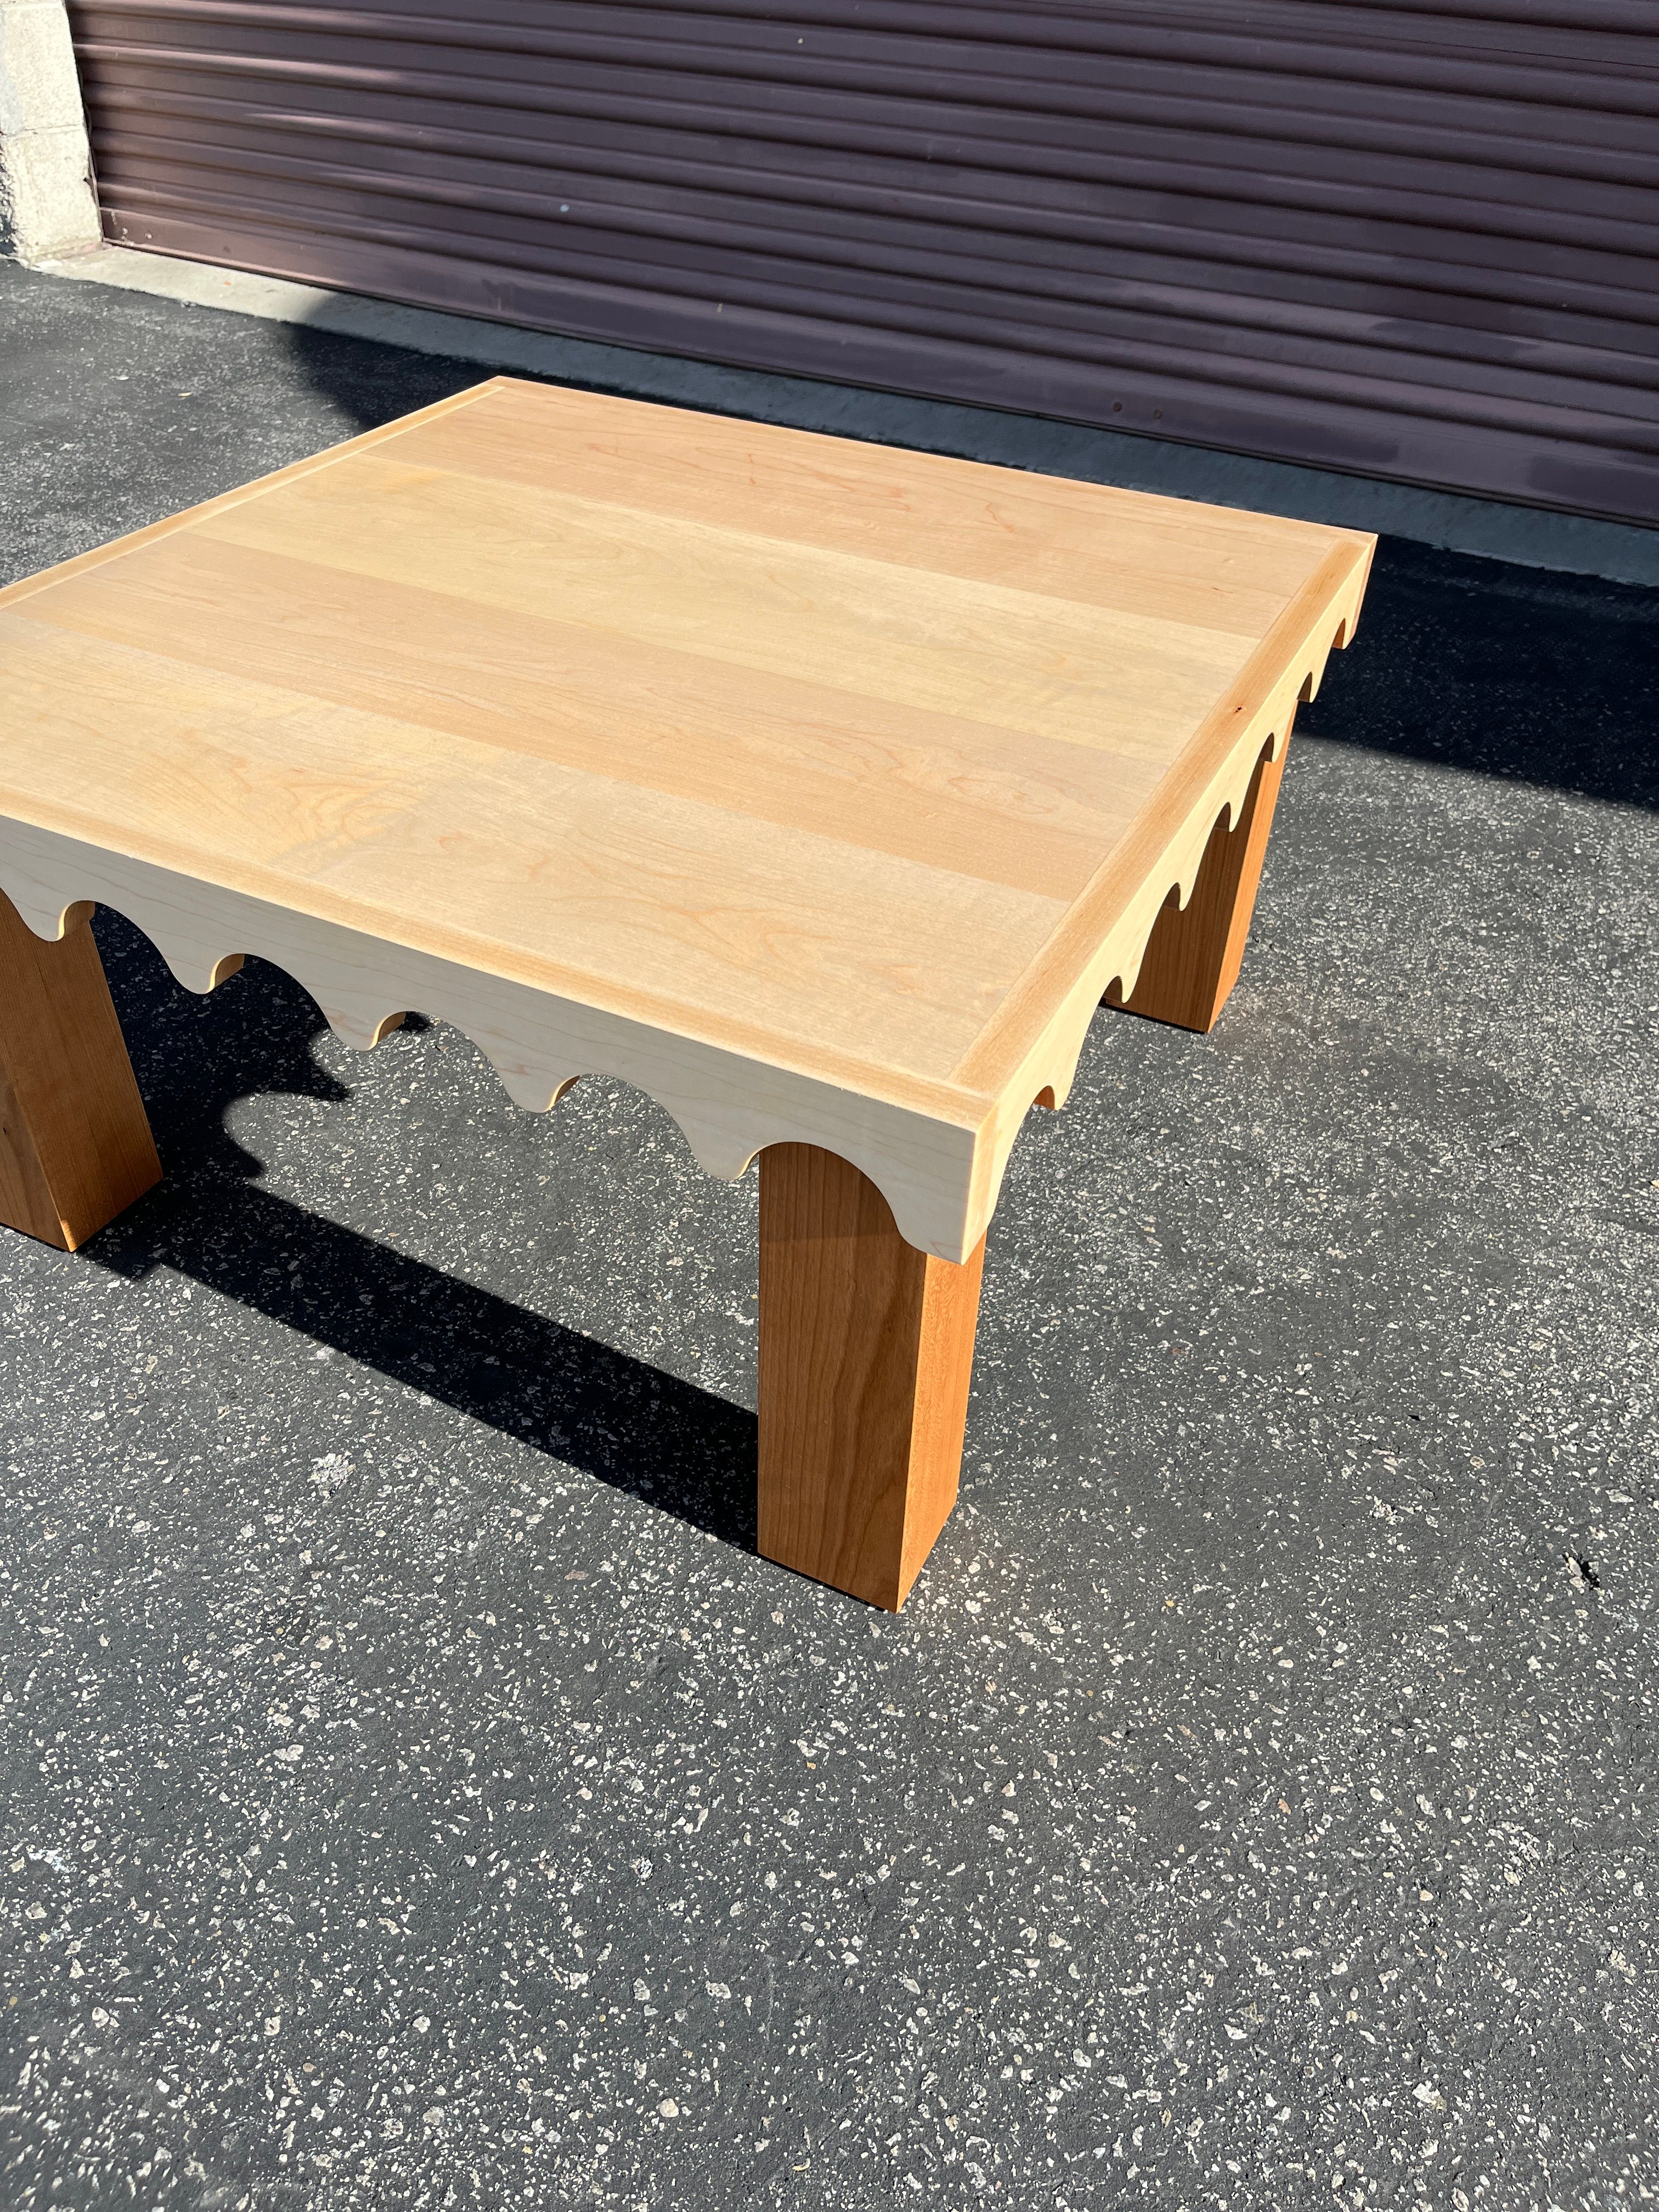  Scallop Tables - Laun Studio product image 2